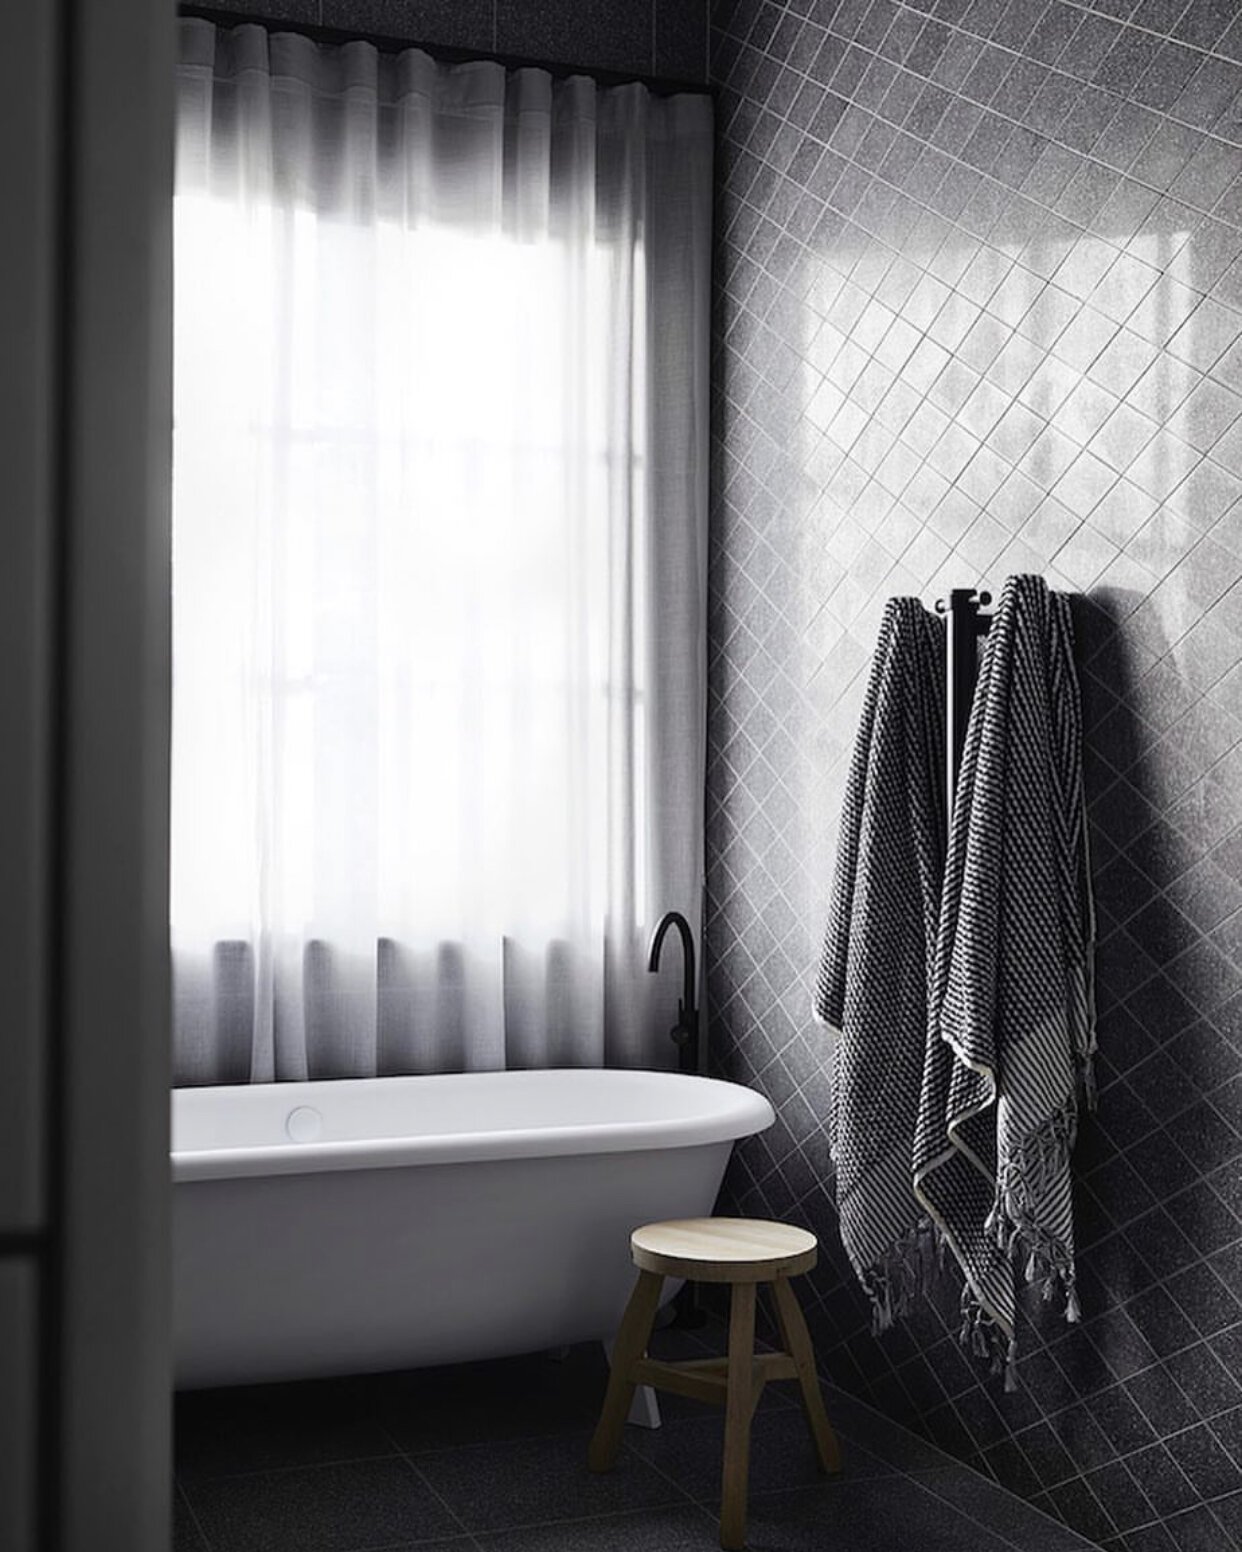 Black tiles placed diagonally on the bathroom wall create a diamond-shaped pattern